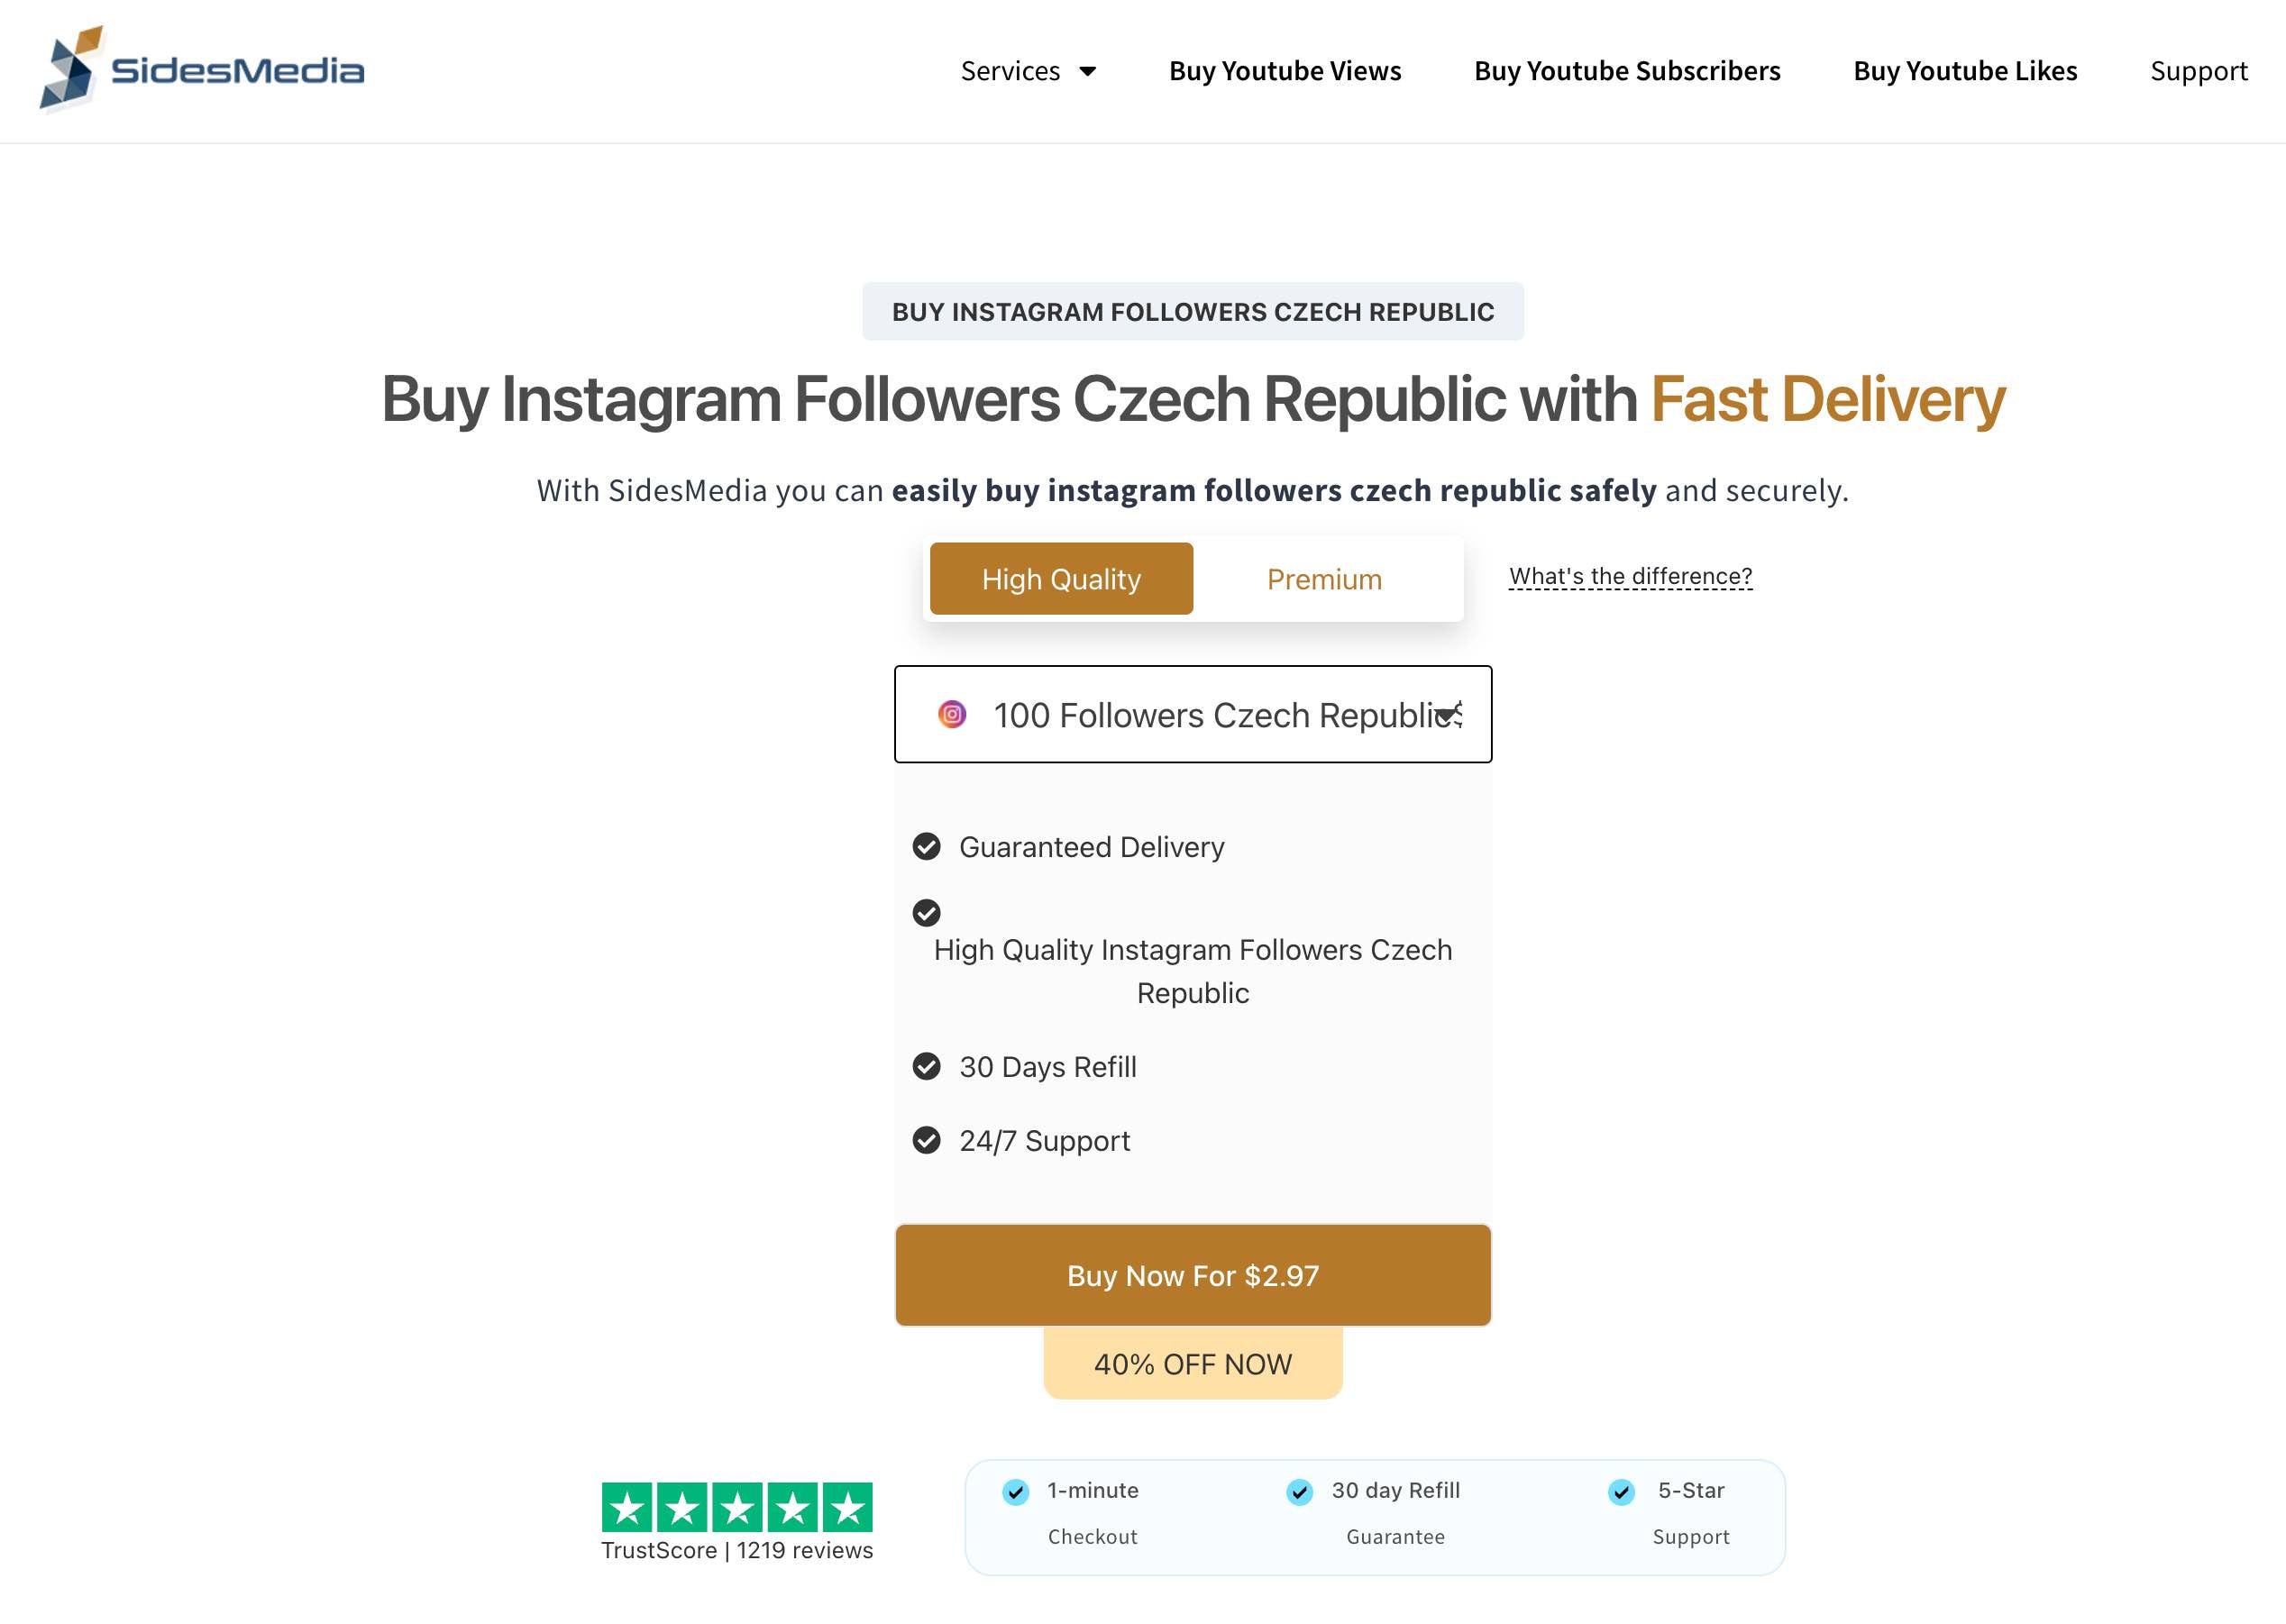 sidesmedia buy instagram followers czech republic page